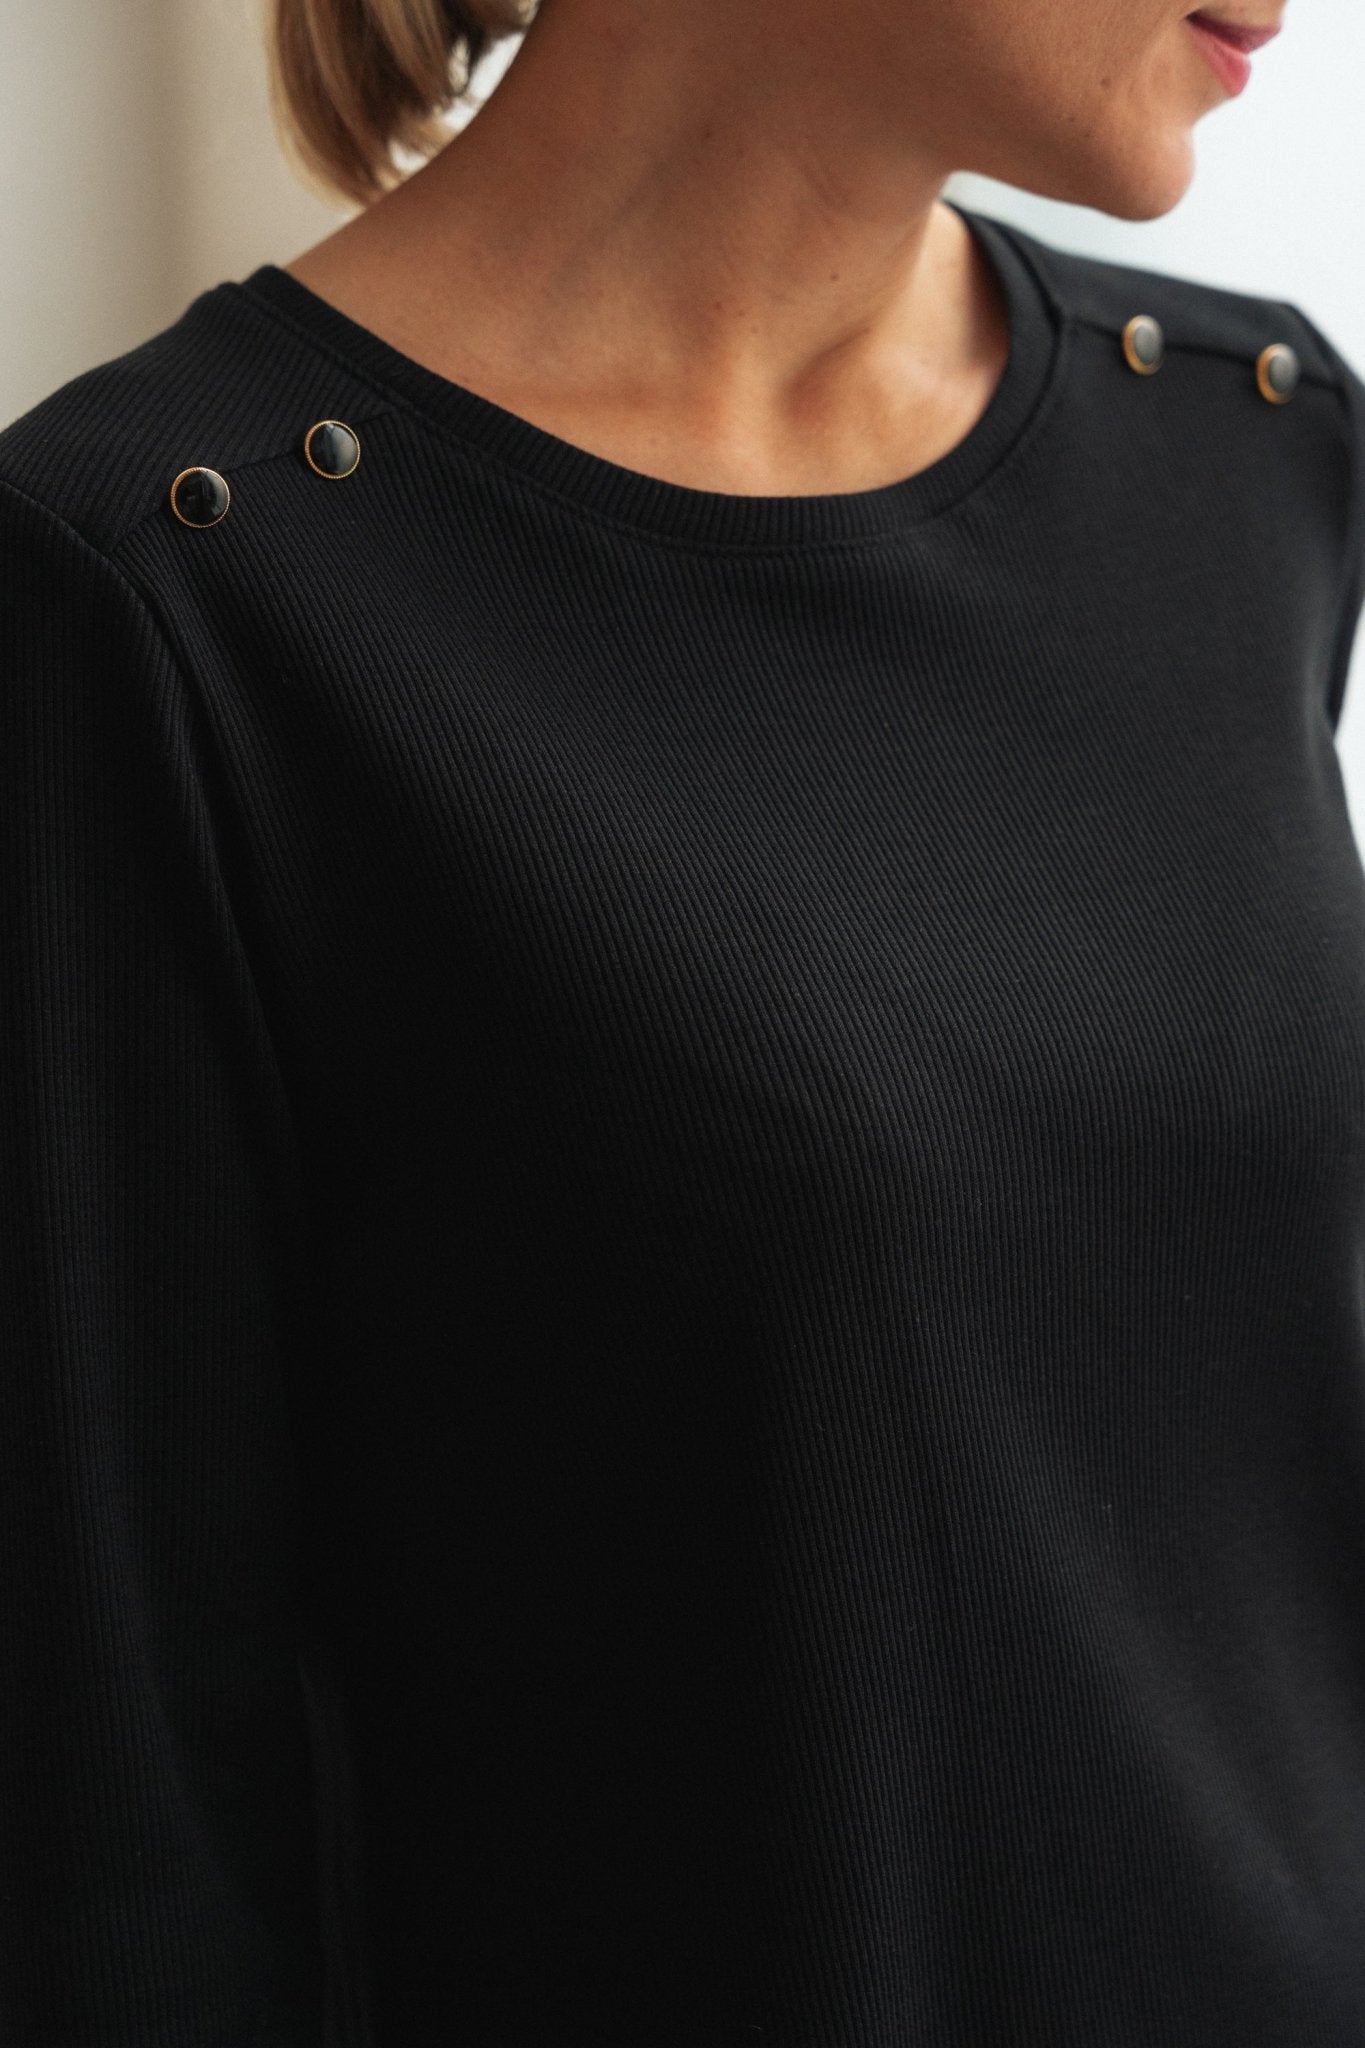 Joli Kit Couture - Robe Malo jersey noir - Joli Lab